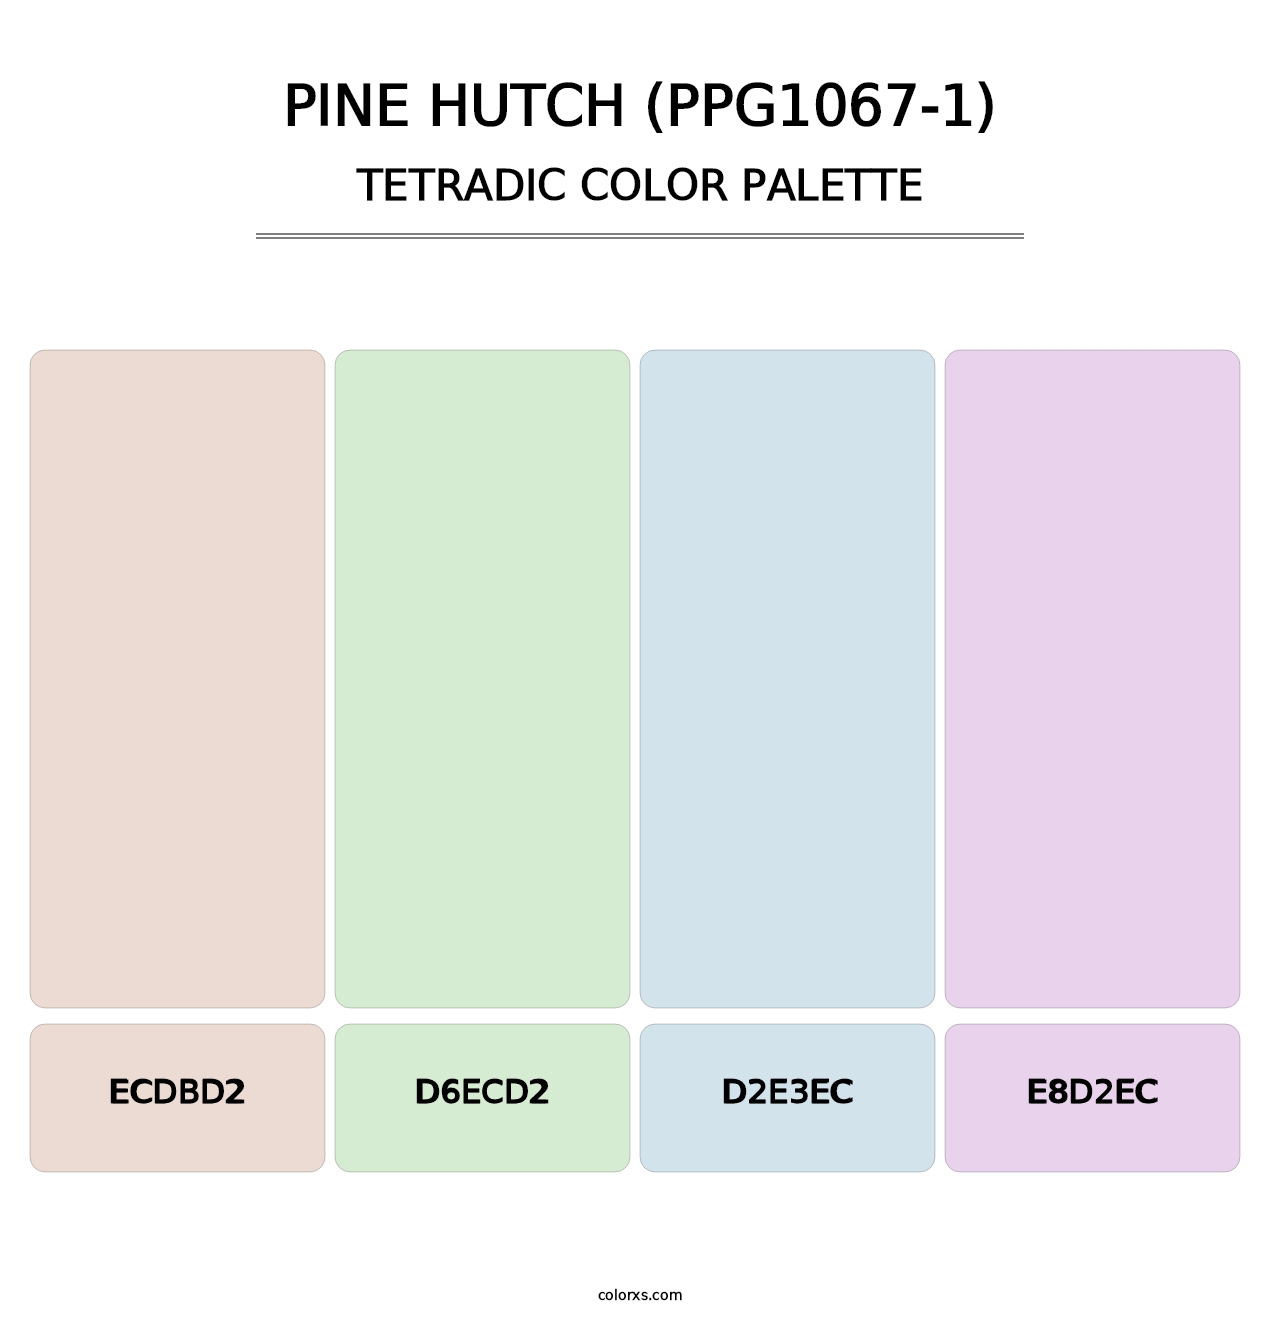 Pine Hutch (PPG1067-1) - Tetradic Color Palette